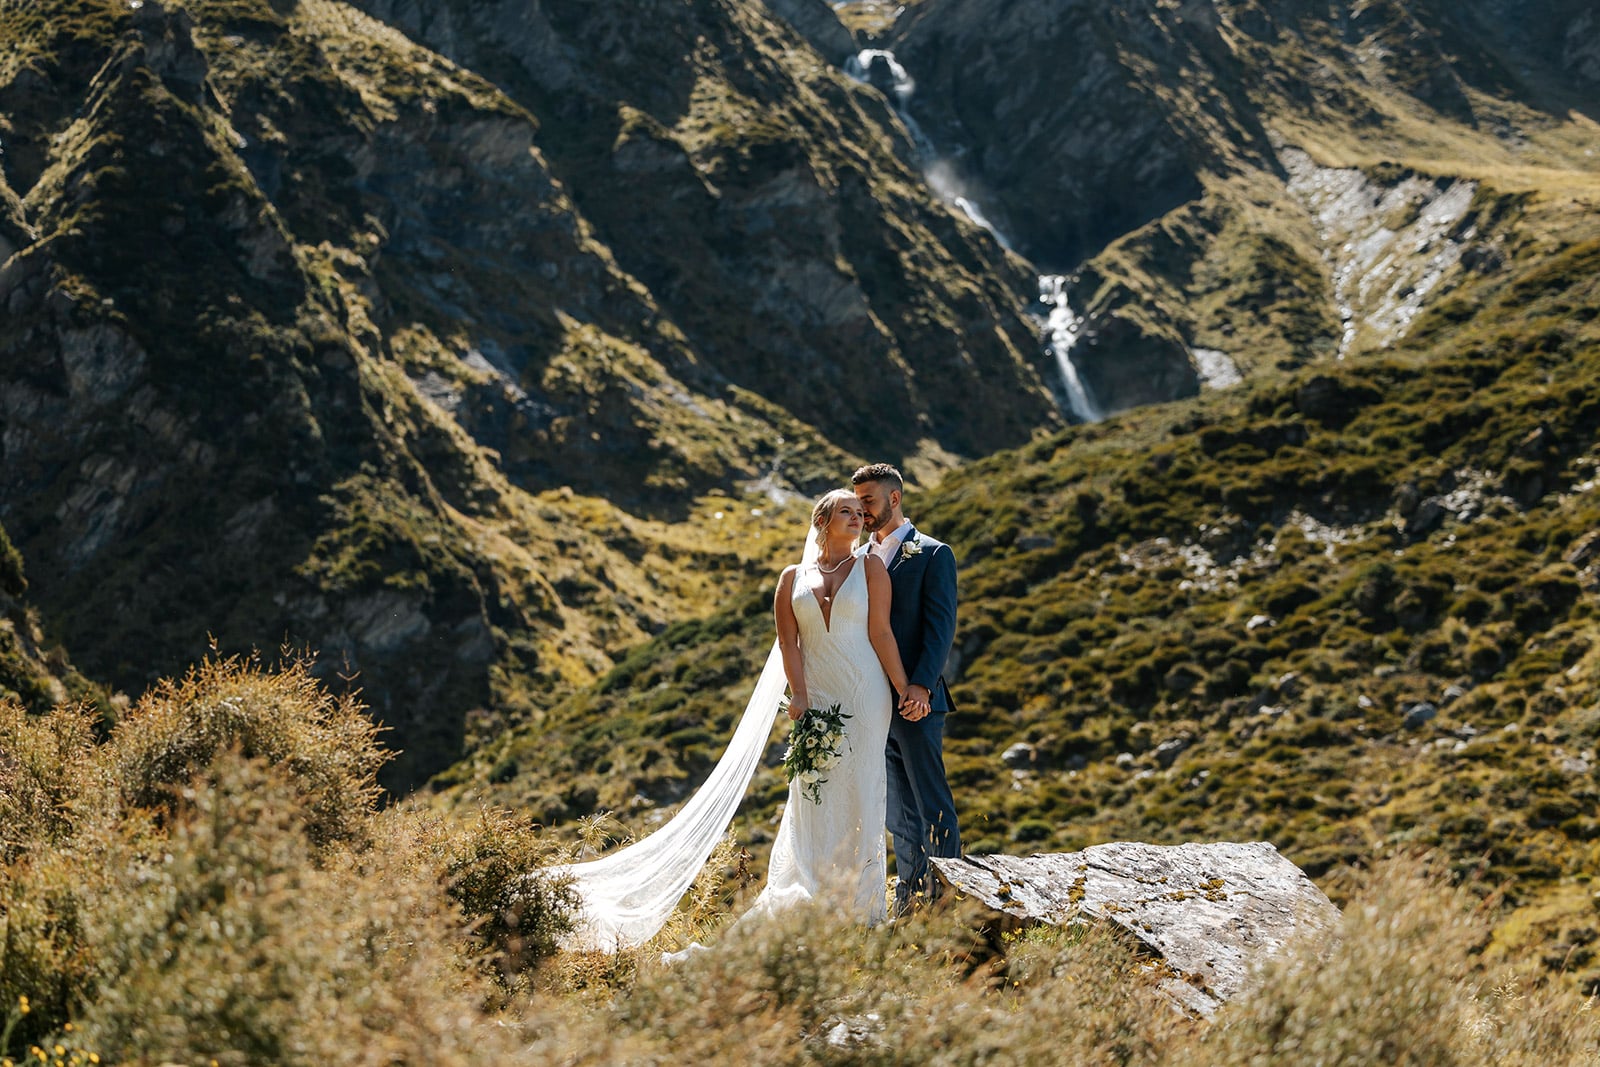 Heli Wedding at Lochnagar, Heli Elopment and adventure wedding